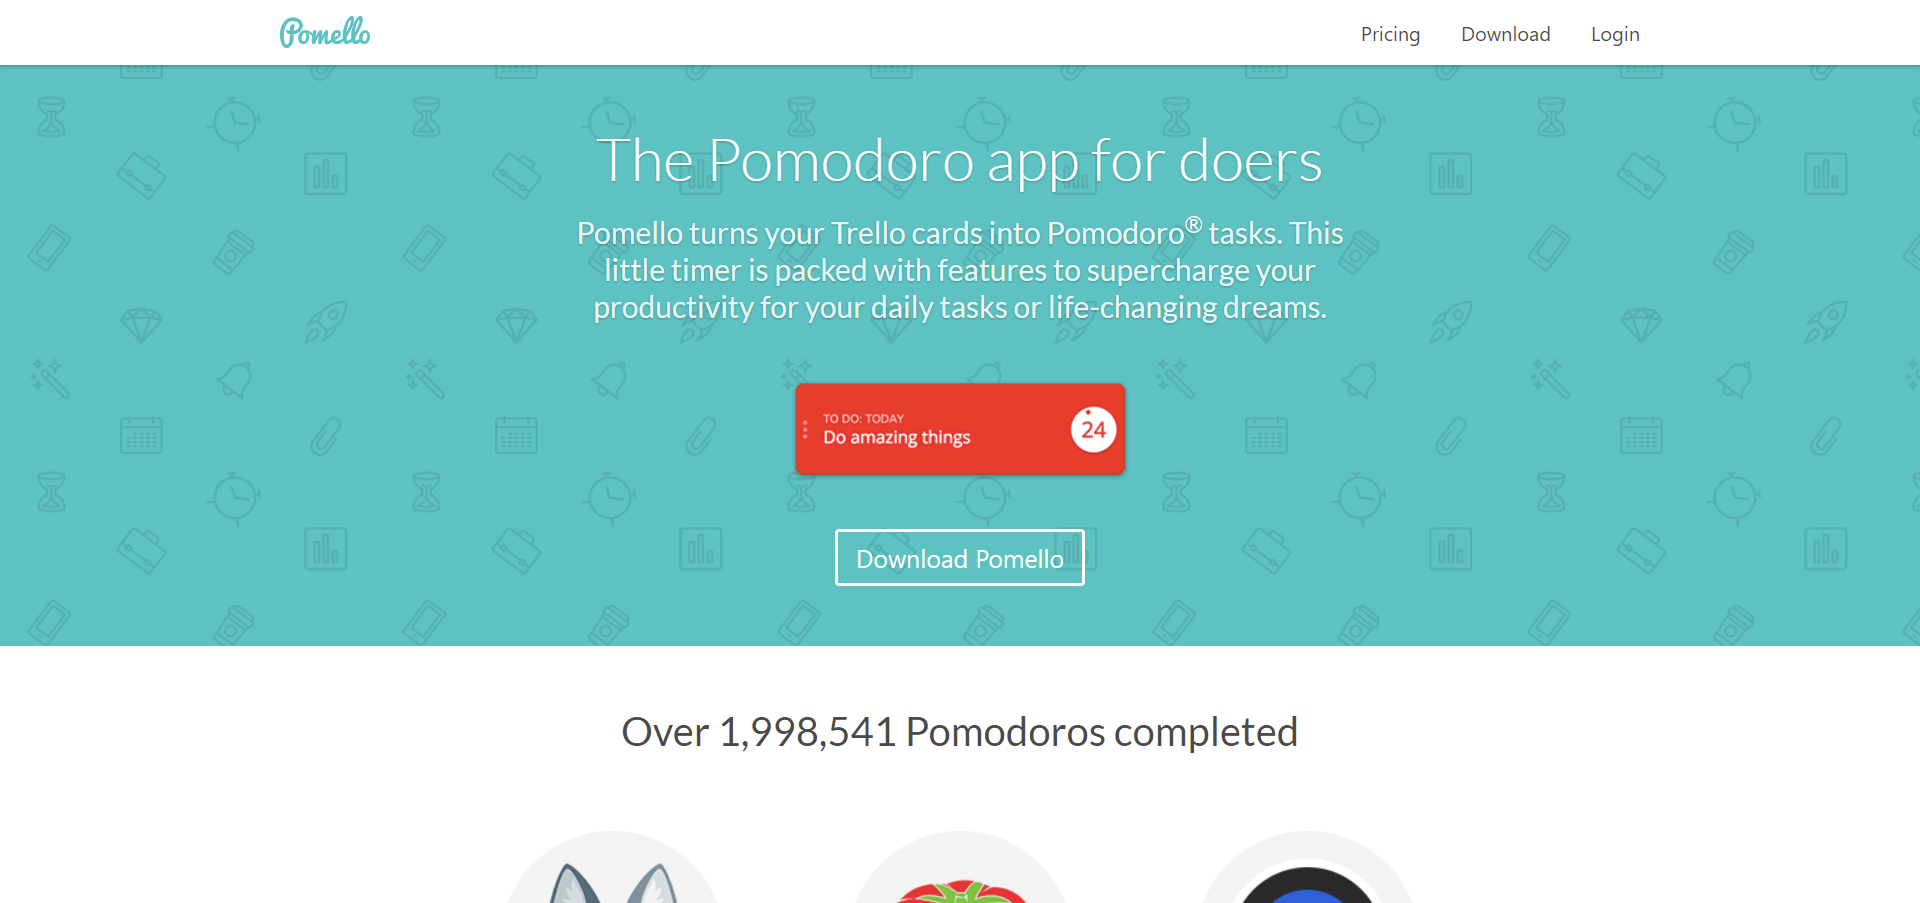 best pomodoro apps, pomodoro apps, pomodoro technique apps, pomodoro timer apps, pomodoro apps for mac, pomodoro apps for android, pomodoro apps for windows, best free pomodoro app android, pomodoro time management apps, pomodoro timer apps for iphone, best pomodoro apps for ios, pomodoro timer, pomodoro technique timer, pomodoro timer app, pomodoro timer online, pomodoro timer windows, pomodoro method timer, pomodoro productivity timer, pomodoro tomato timer